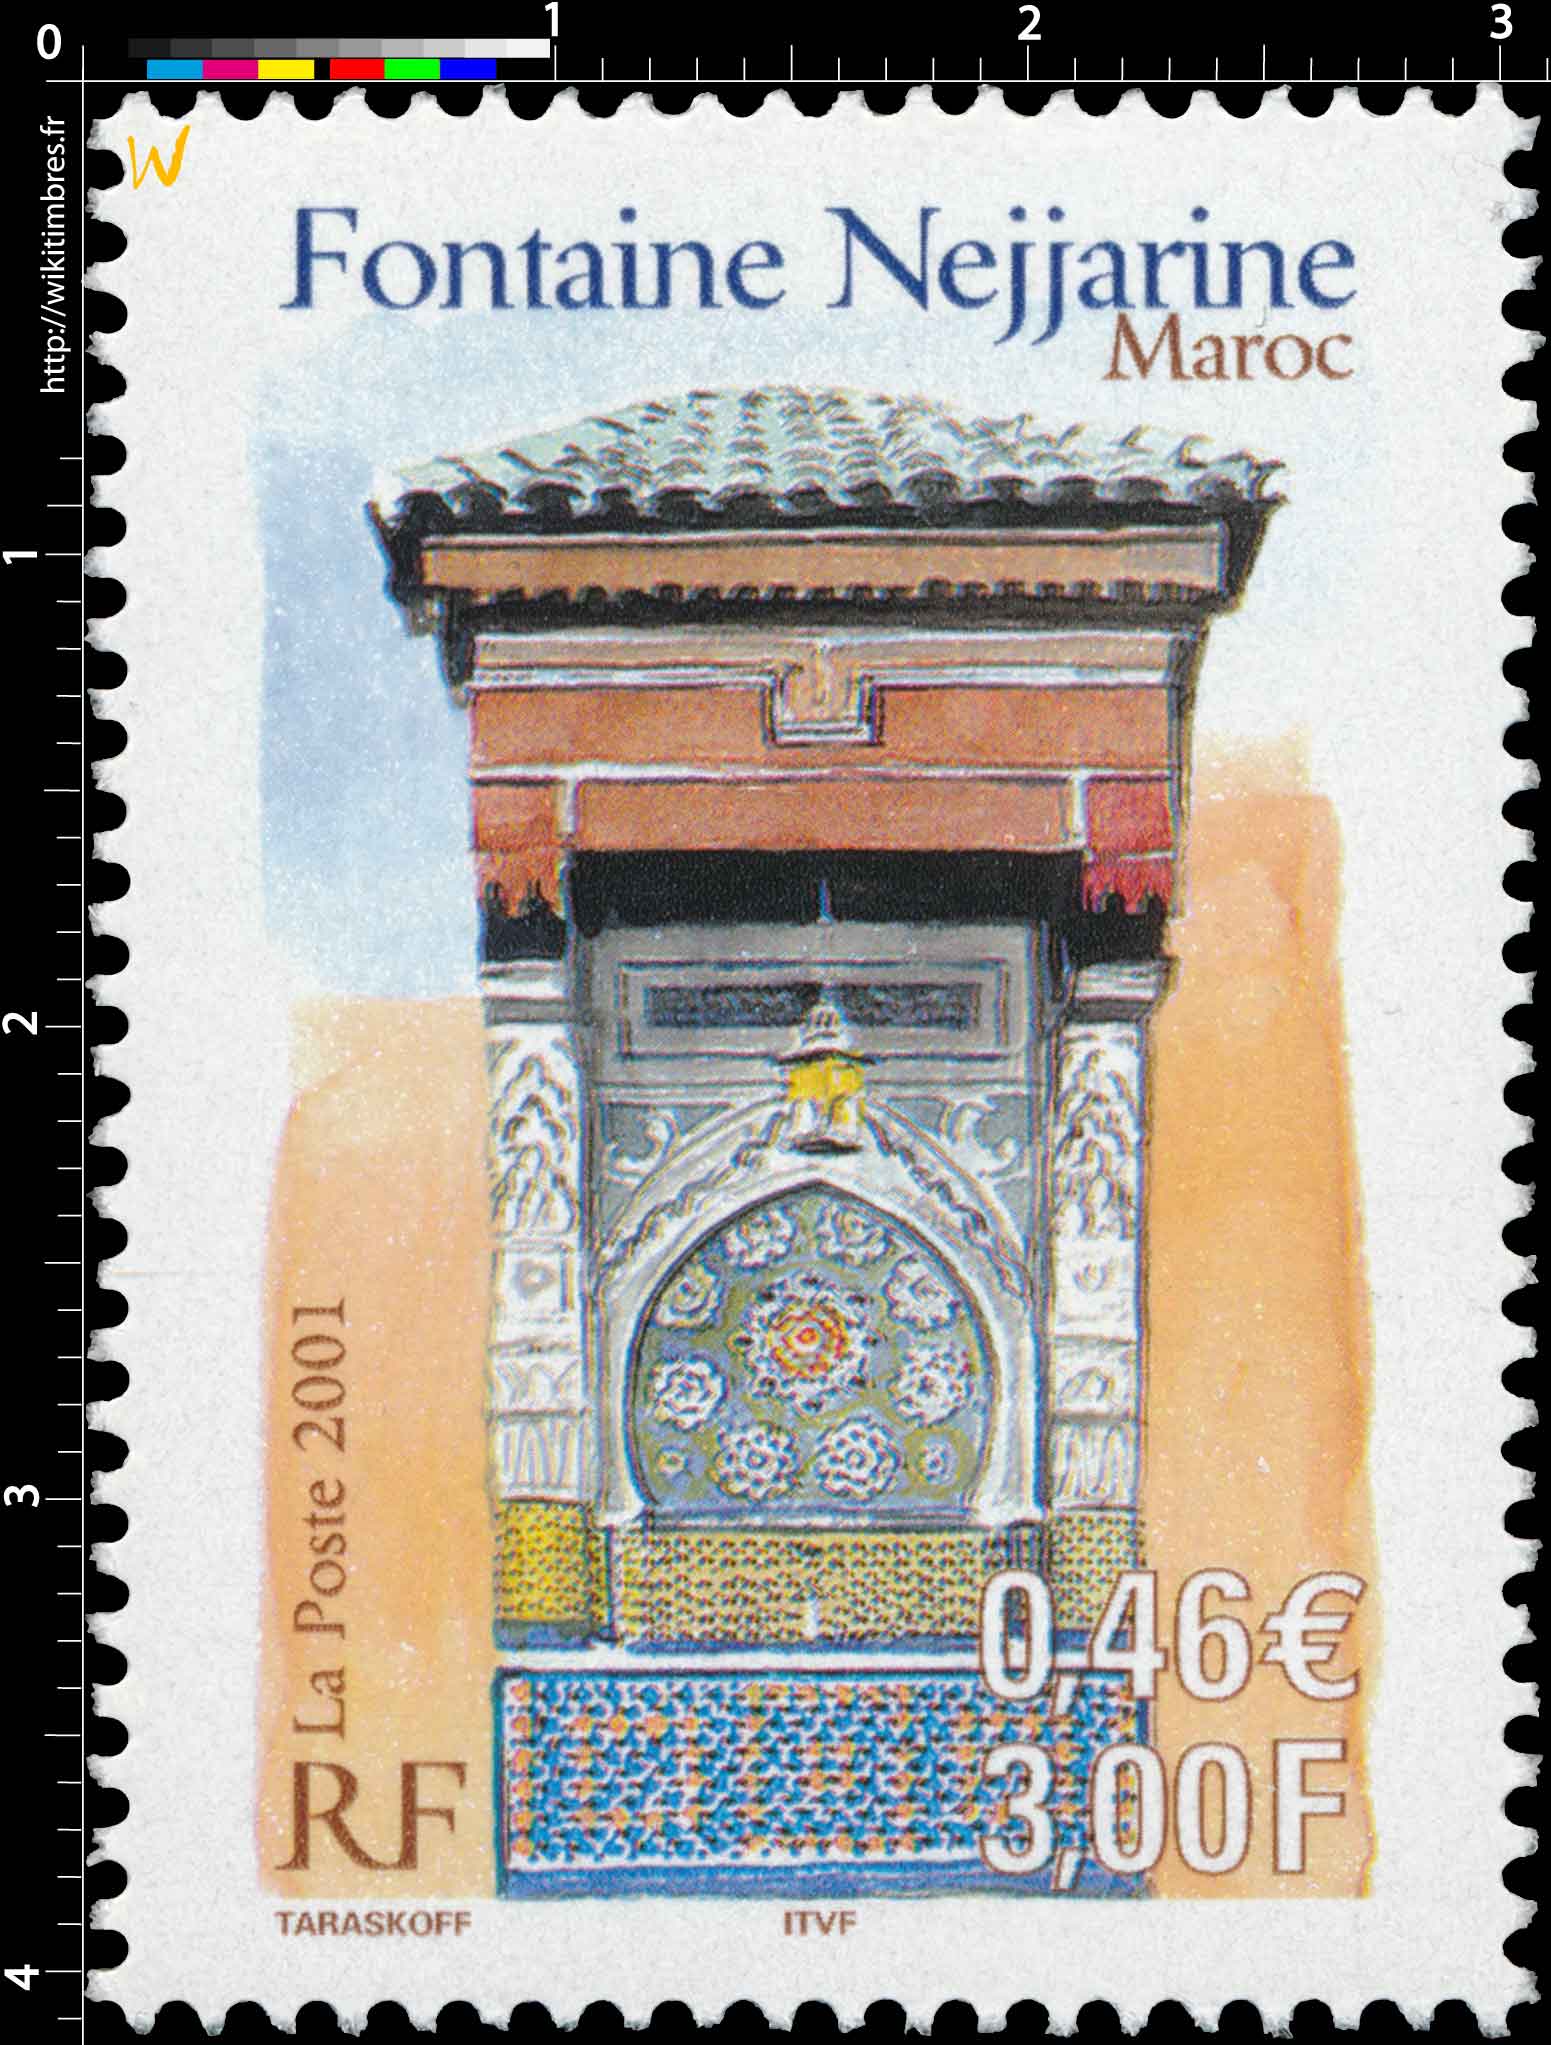 2001 Fontaine Nejjarine Maroc